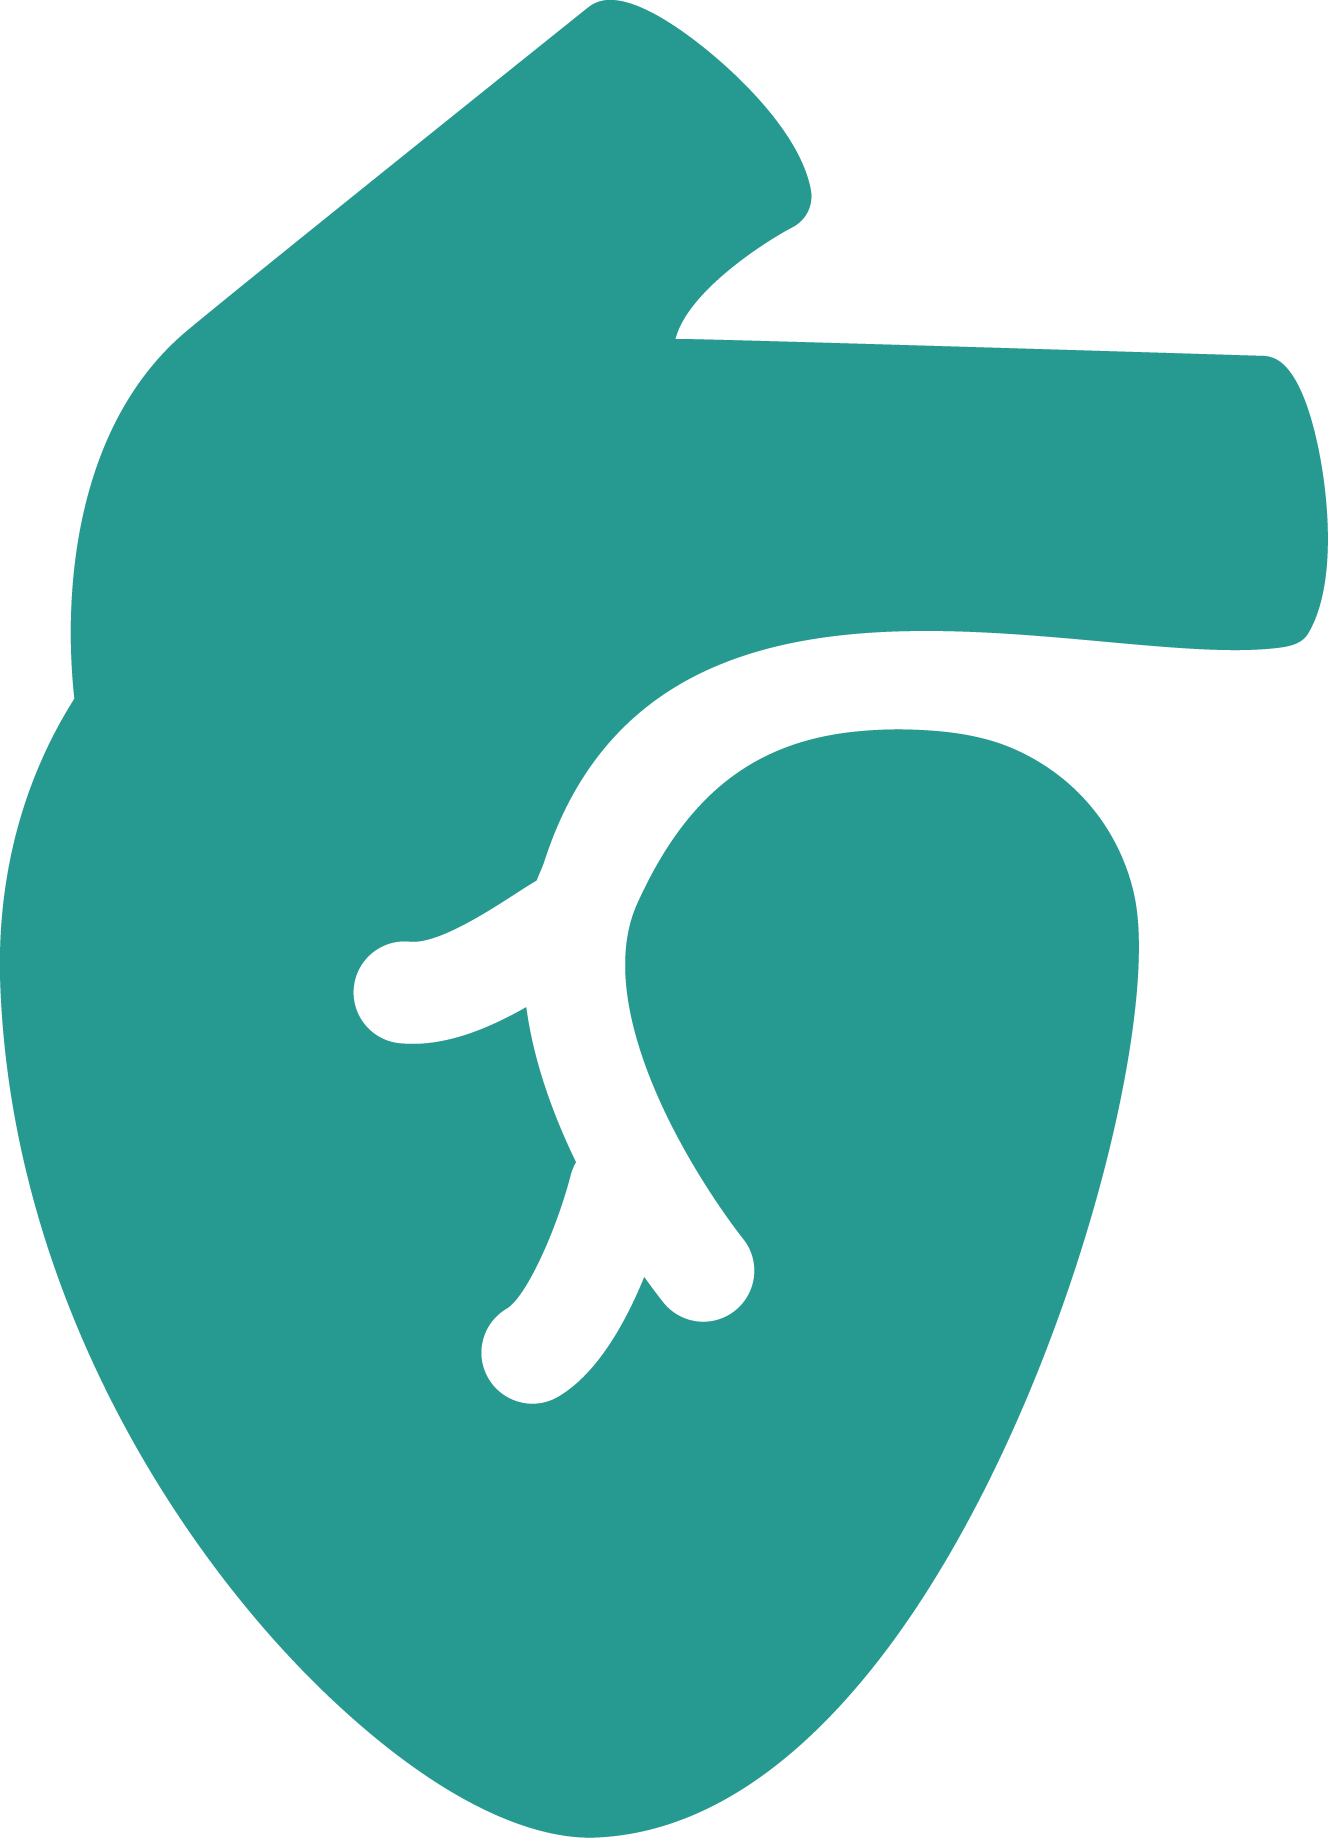 Aqua heart icon